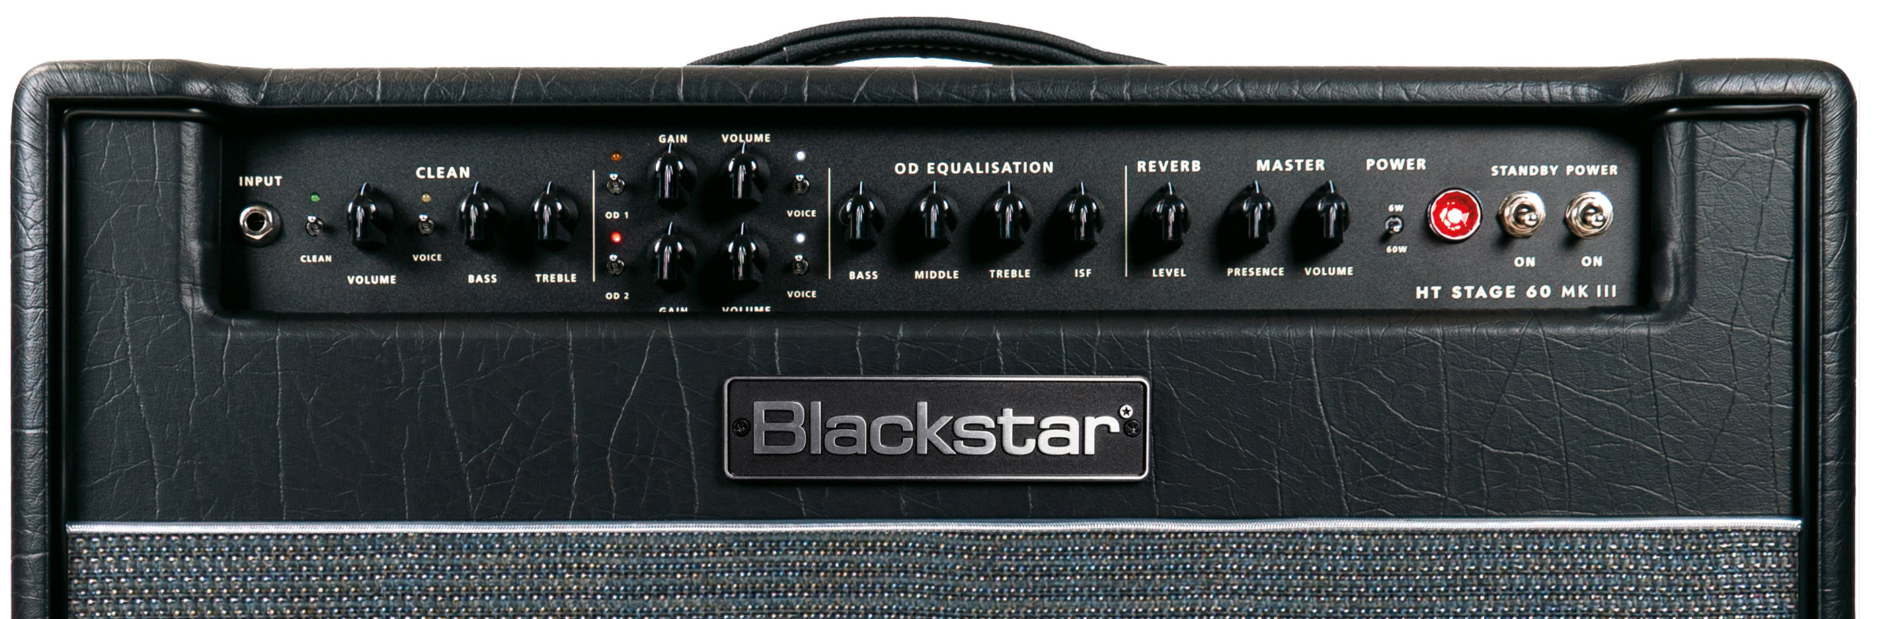 Blackstar Ht Venue Stage 60 112 Mkiii 60w 1x12 El34 - Electric guitar combo amp - Variation 3